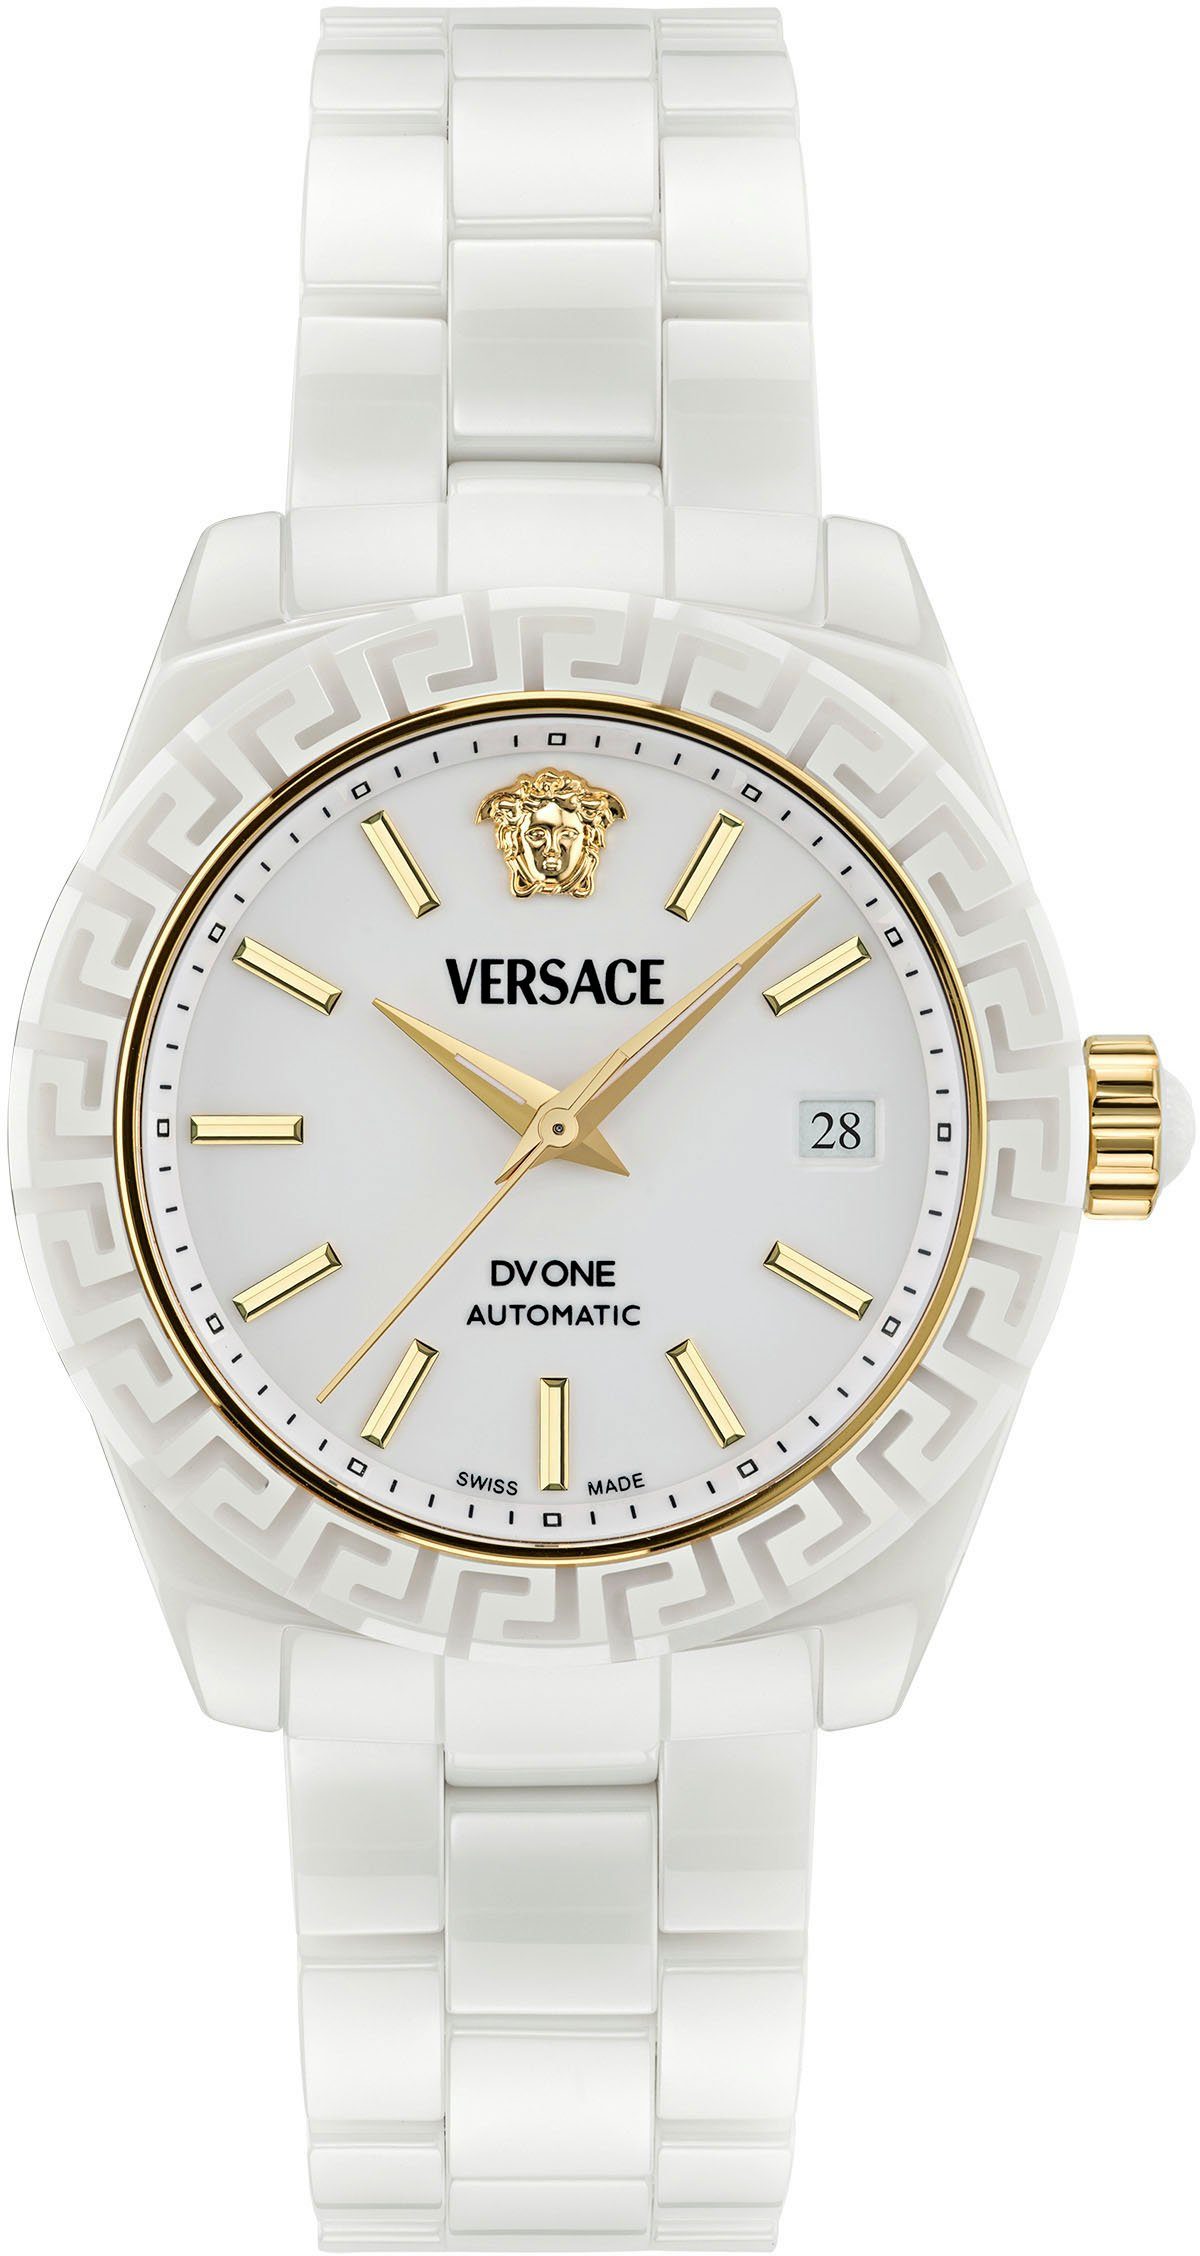 Versace Automatikuhr DV ONE AUTOMATIC, VE6B00223, Armbanduhr, Damenuhr, mechanische Uhr, Datum, Swiss Made, Keramik